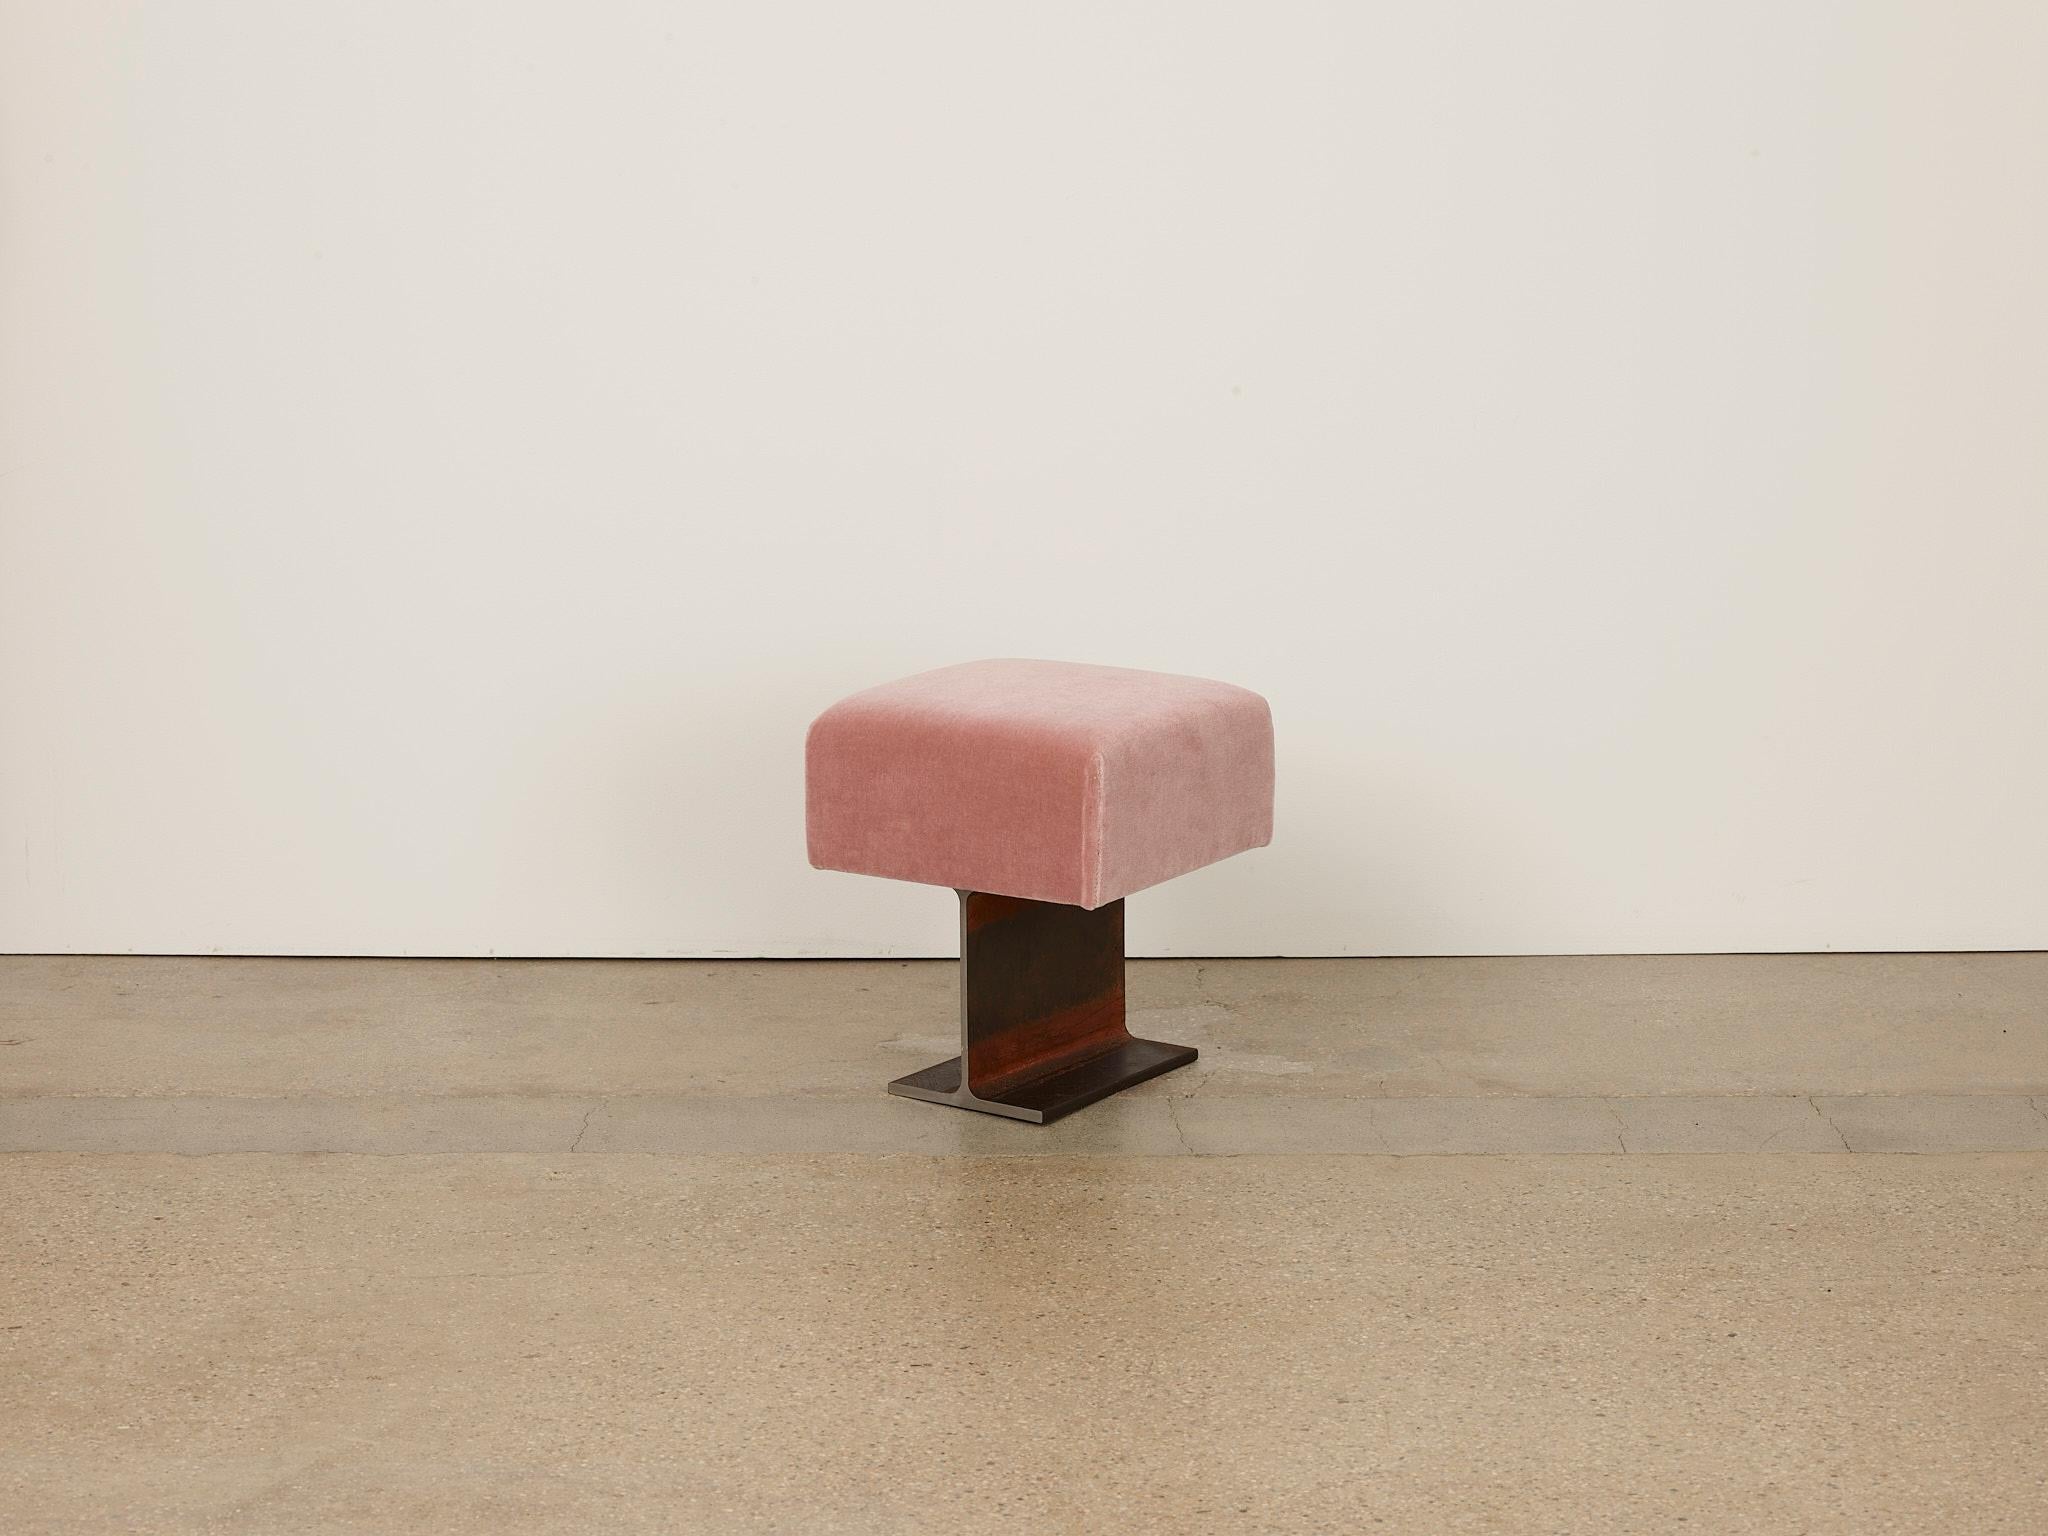 Trono block pink chair by Umberto Bellardi Ricci
Dimensions: D 14.5